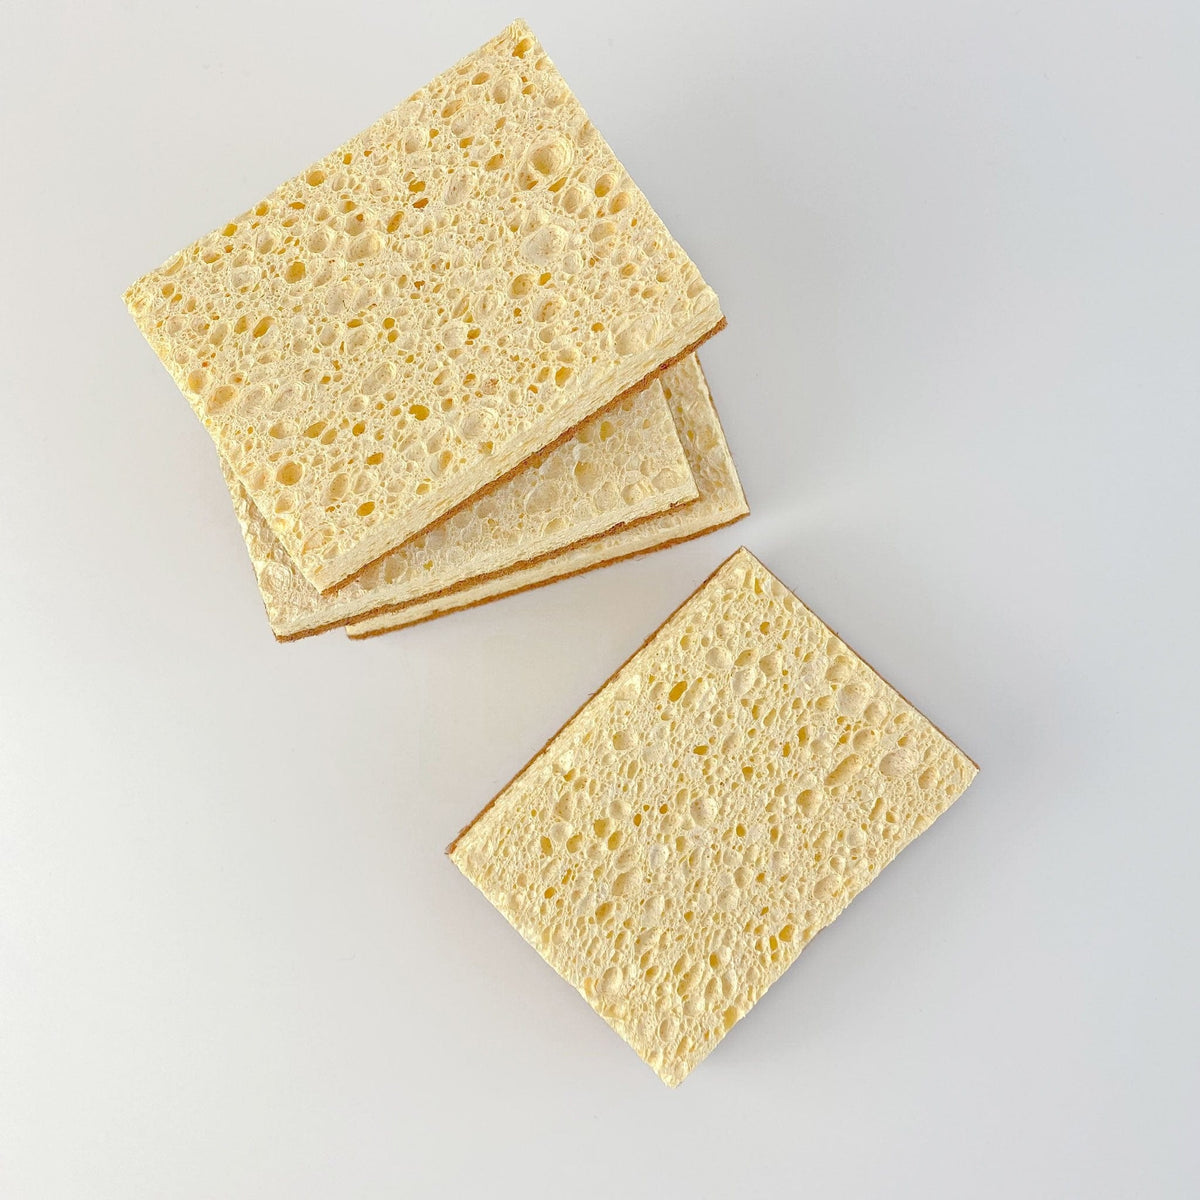 Gaia Guy Natural Dish Sponge (10 Pack), Luffa Kitchen Scrubber Scouring Pad, 100% Plastic-Free Loofah Plant-Based Dishwashing